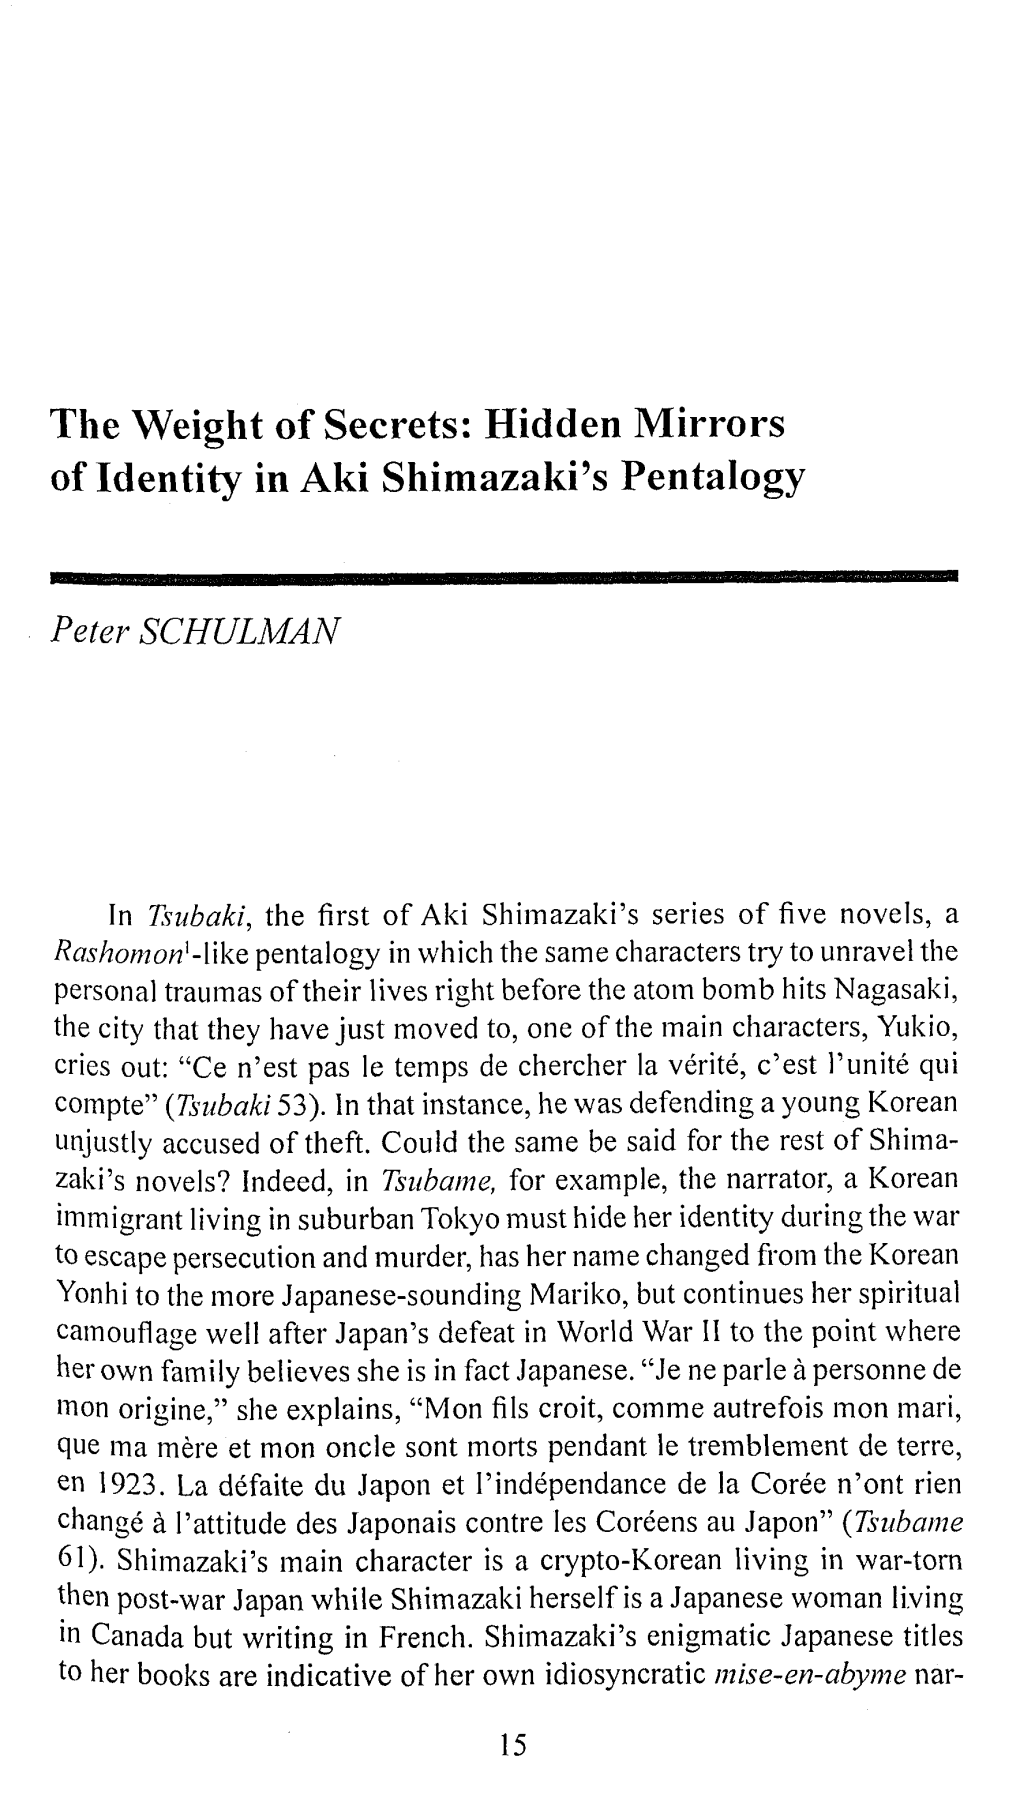 The Weight of Secrets: Hidden Mirrors of Ldentity in Aki Shimazaki's Pentalogy